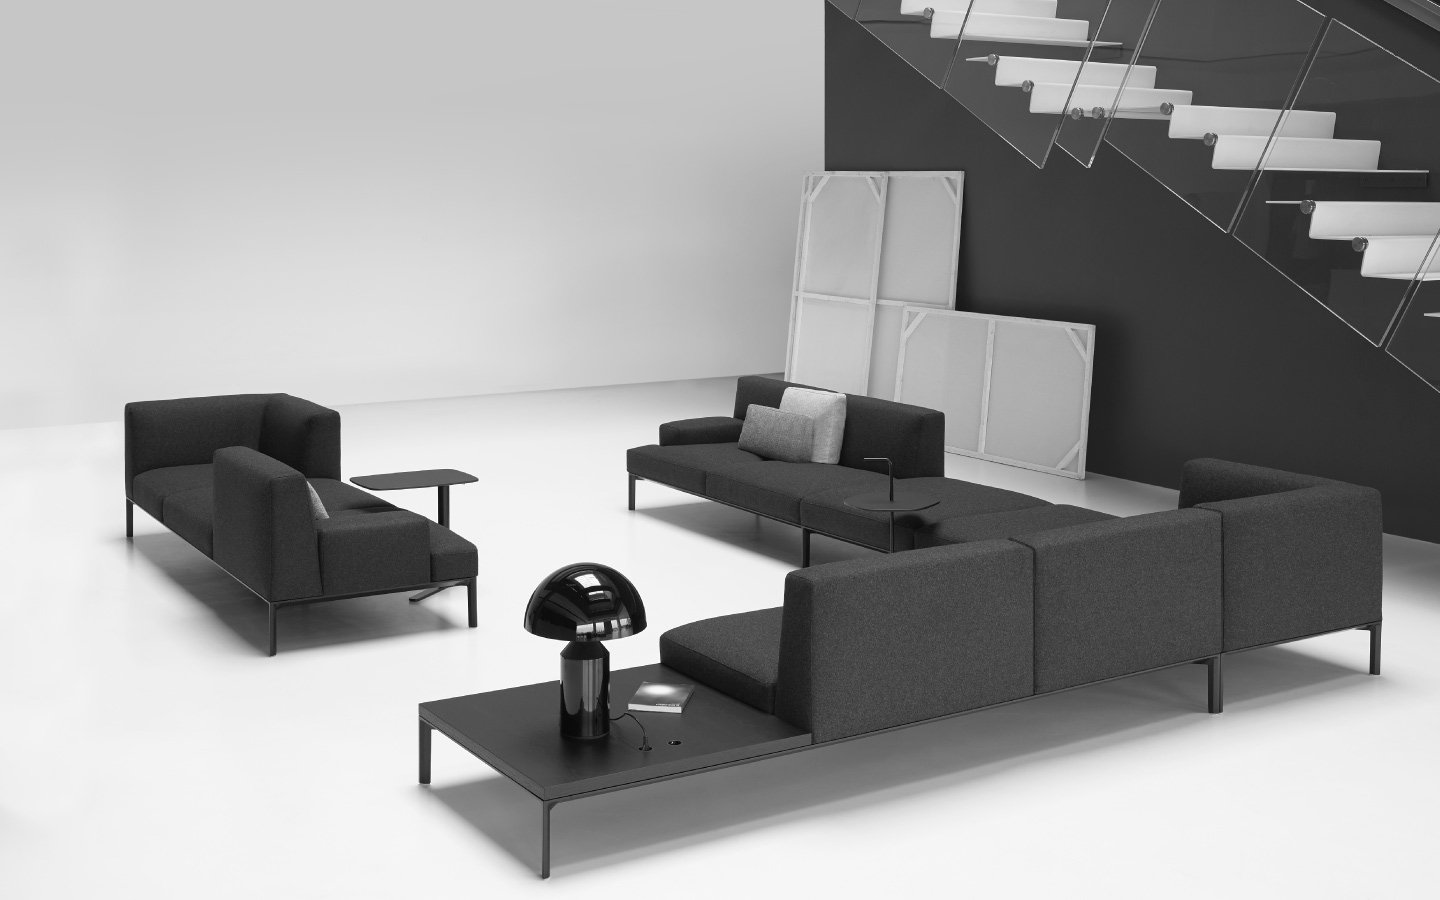 Add Soft Sofa modular from lapalma, designed by Francesco Rota